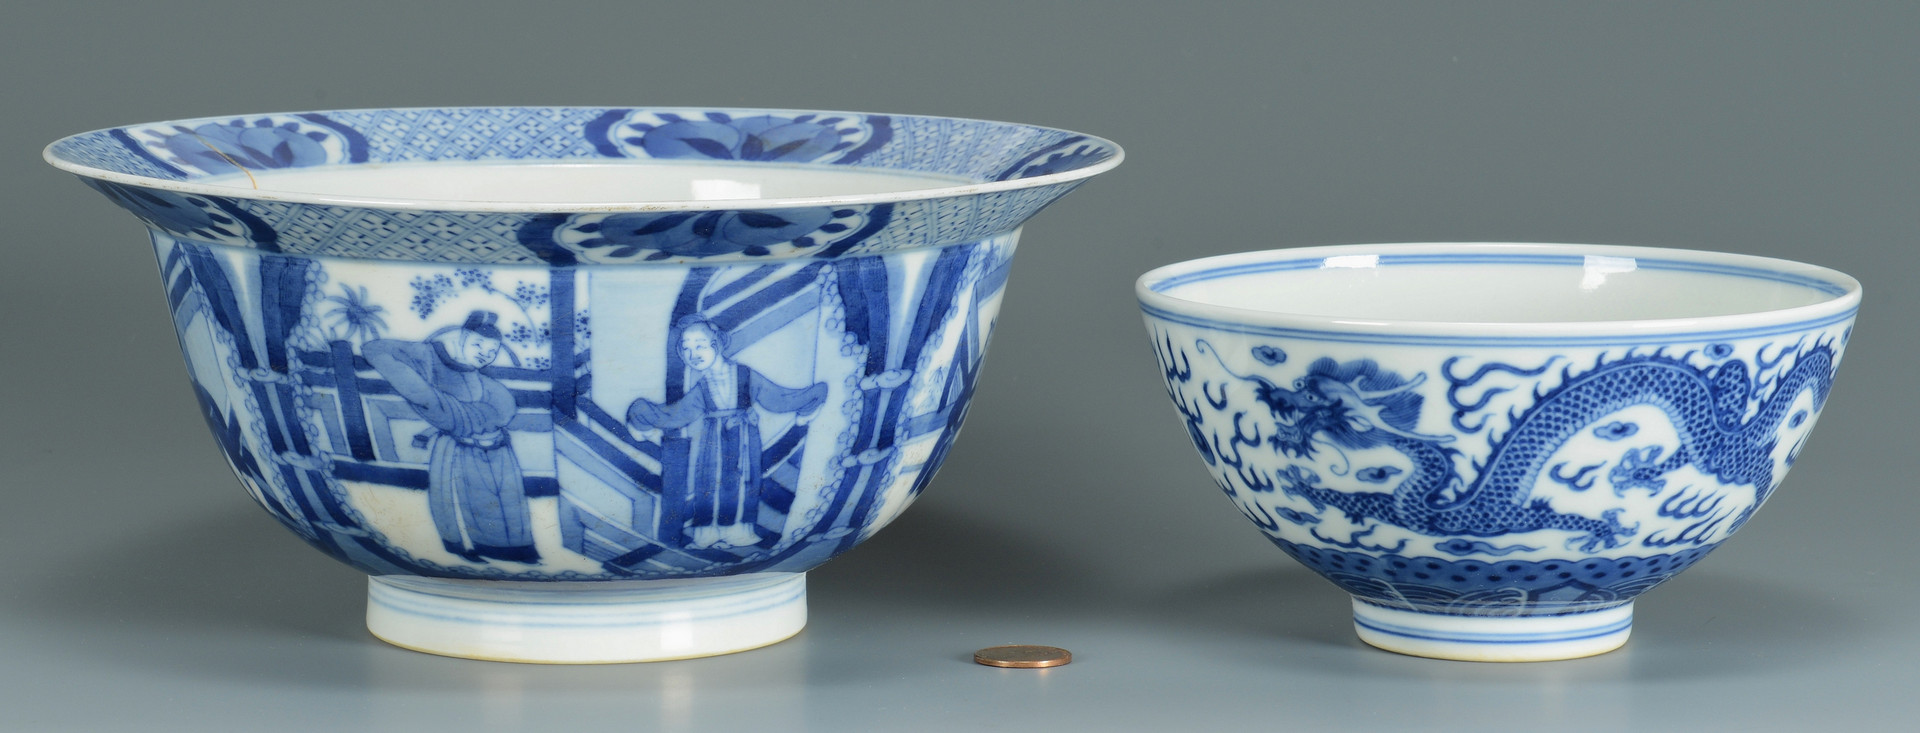 Lot 668: 2 Chinese Blue & White Porcelain Bowls